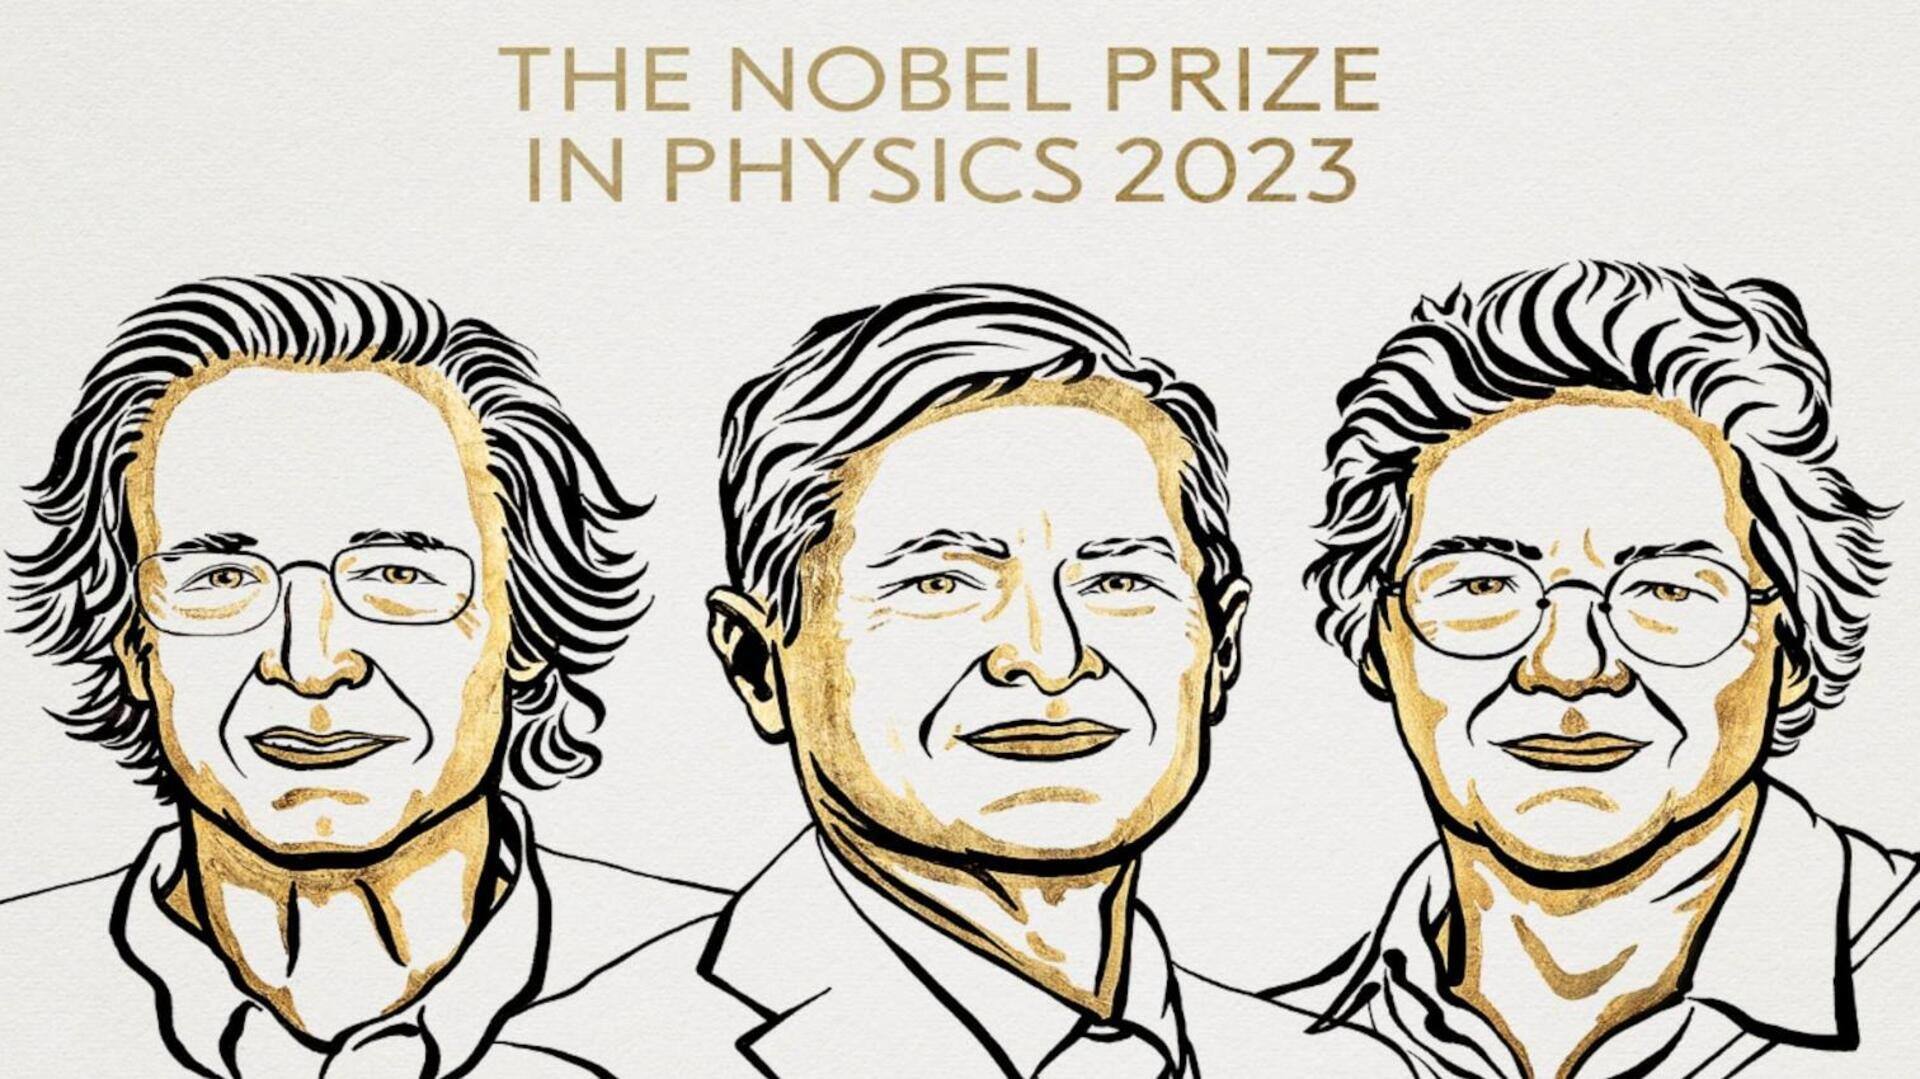 2023 Nobel Prize in Physics awarded to Agostini, Krausz, L'Huillier